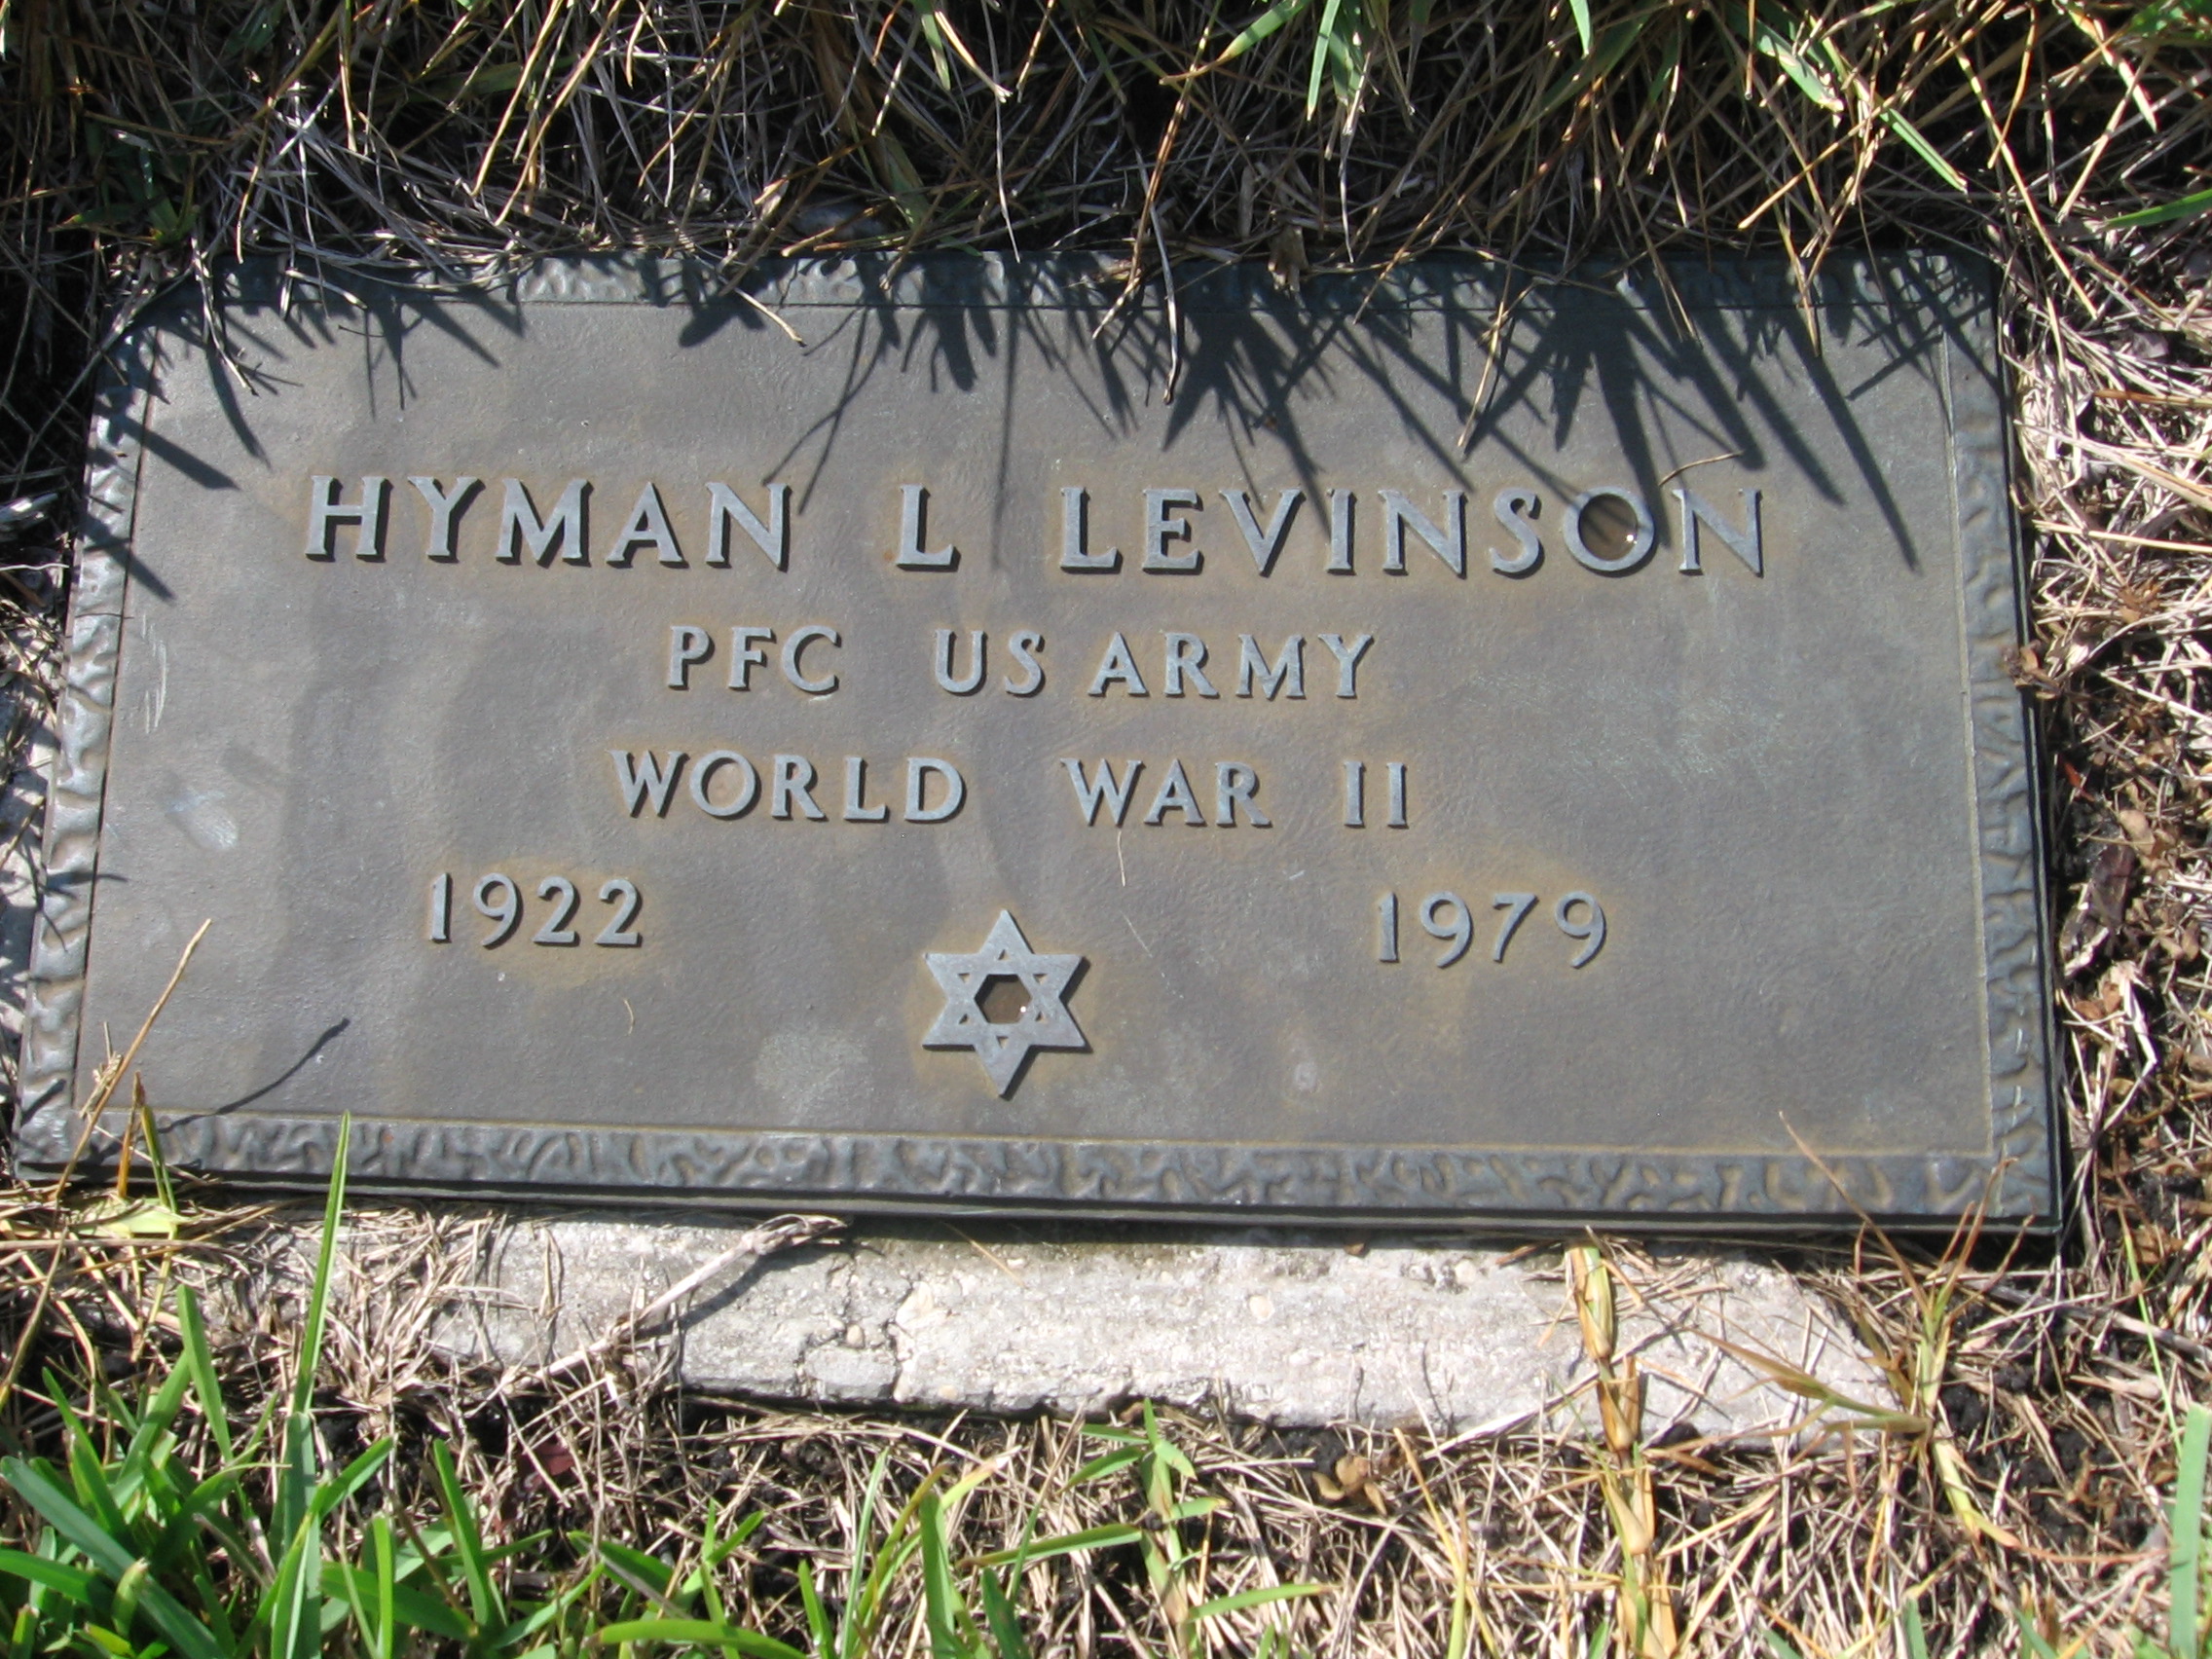 PFC Hyman L Levinson